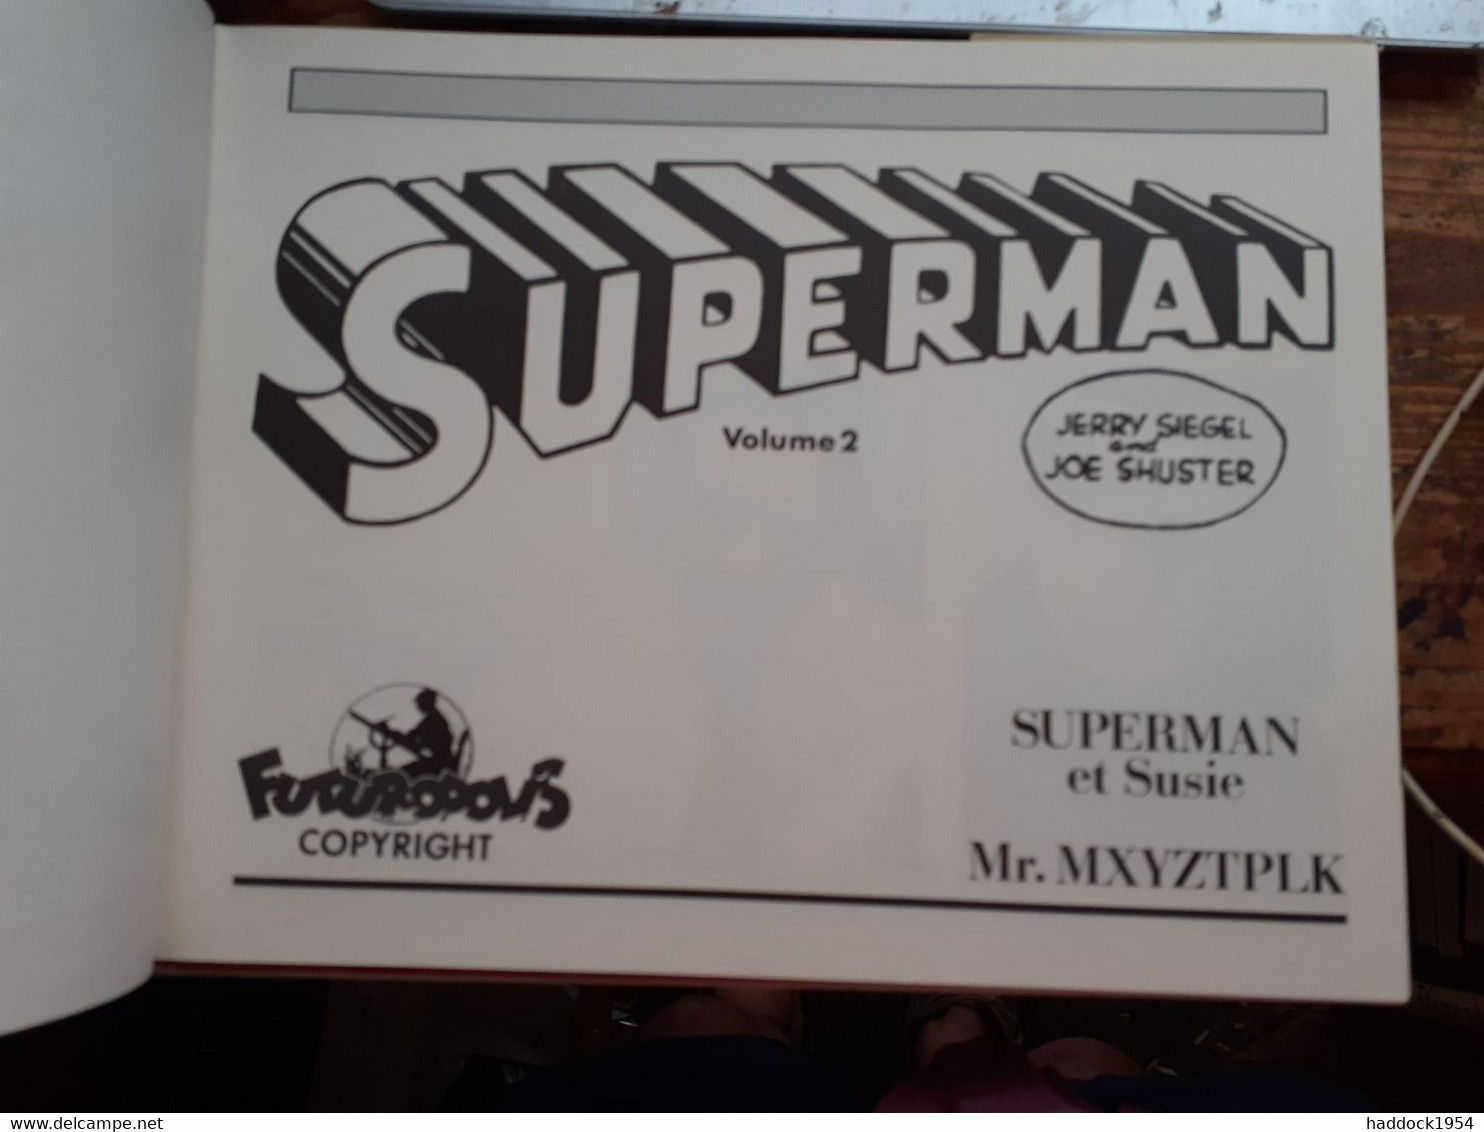 Superman 1943-1944  Volume 2 JERRY SIEGEL JOE SCHUSTER Futuropolis 1982 - Superman